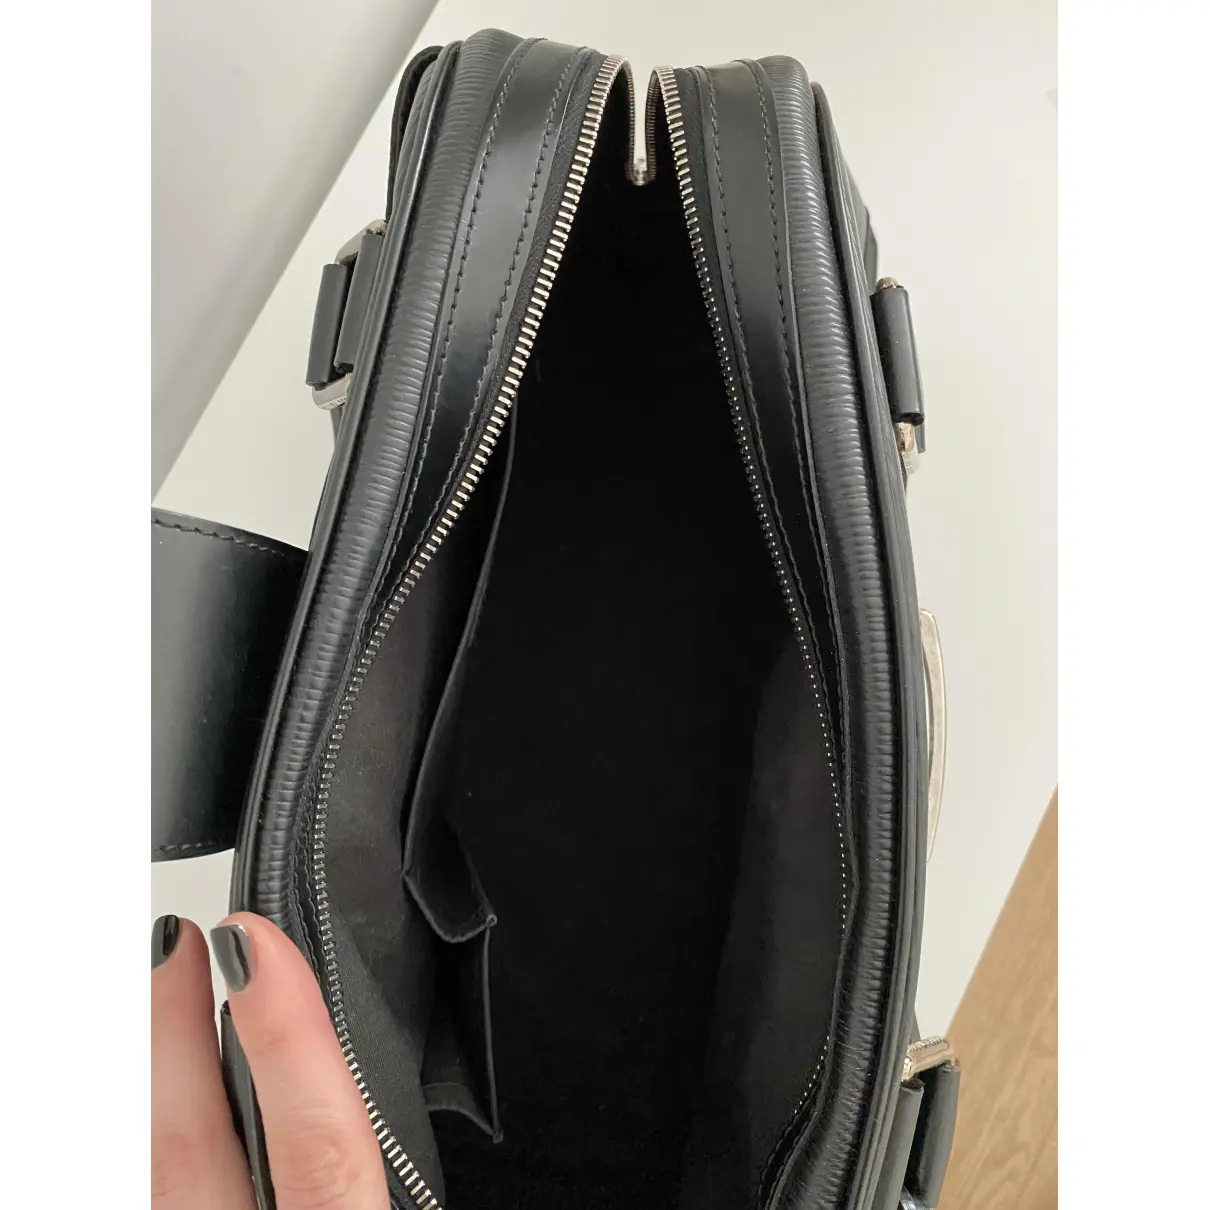 Montaigne leather handbag Louis Vuitton